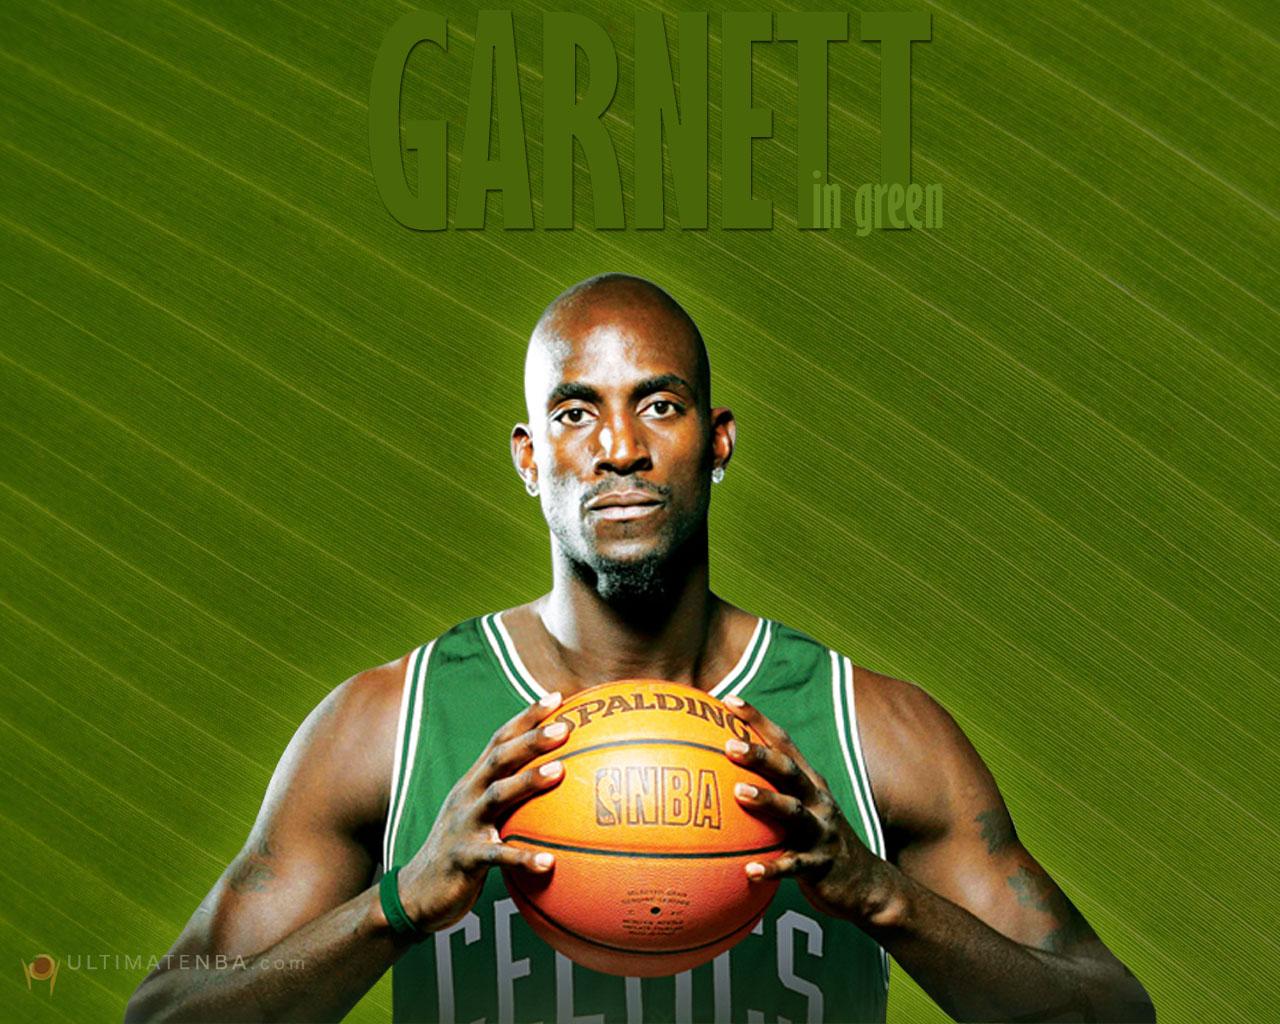 Garnet баскетболист